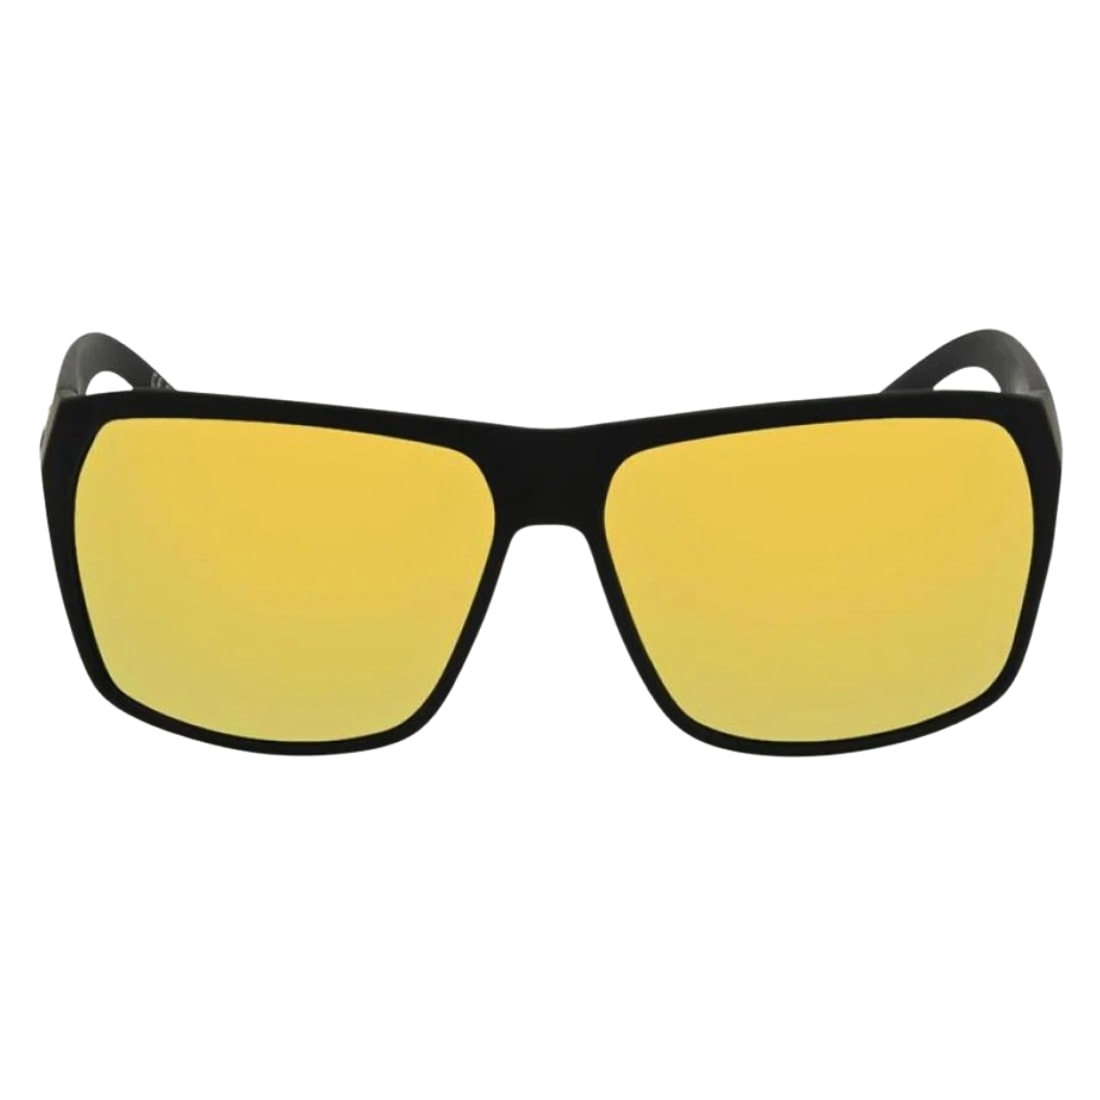 I-Sea Nick I Sunglasses - Black/Yellow Polarised - Square/Rectangular Sunglasses by I-Sea